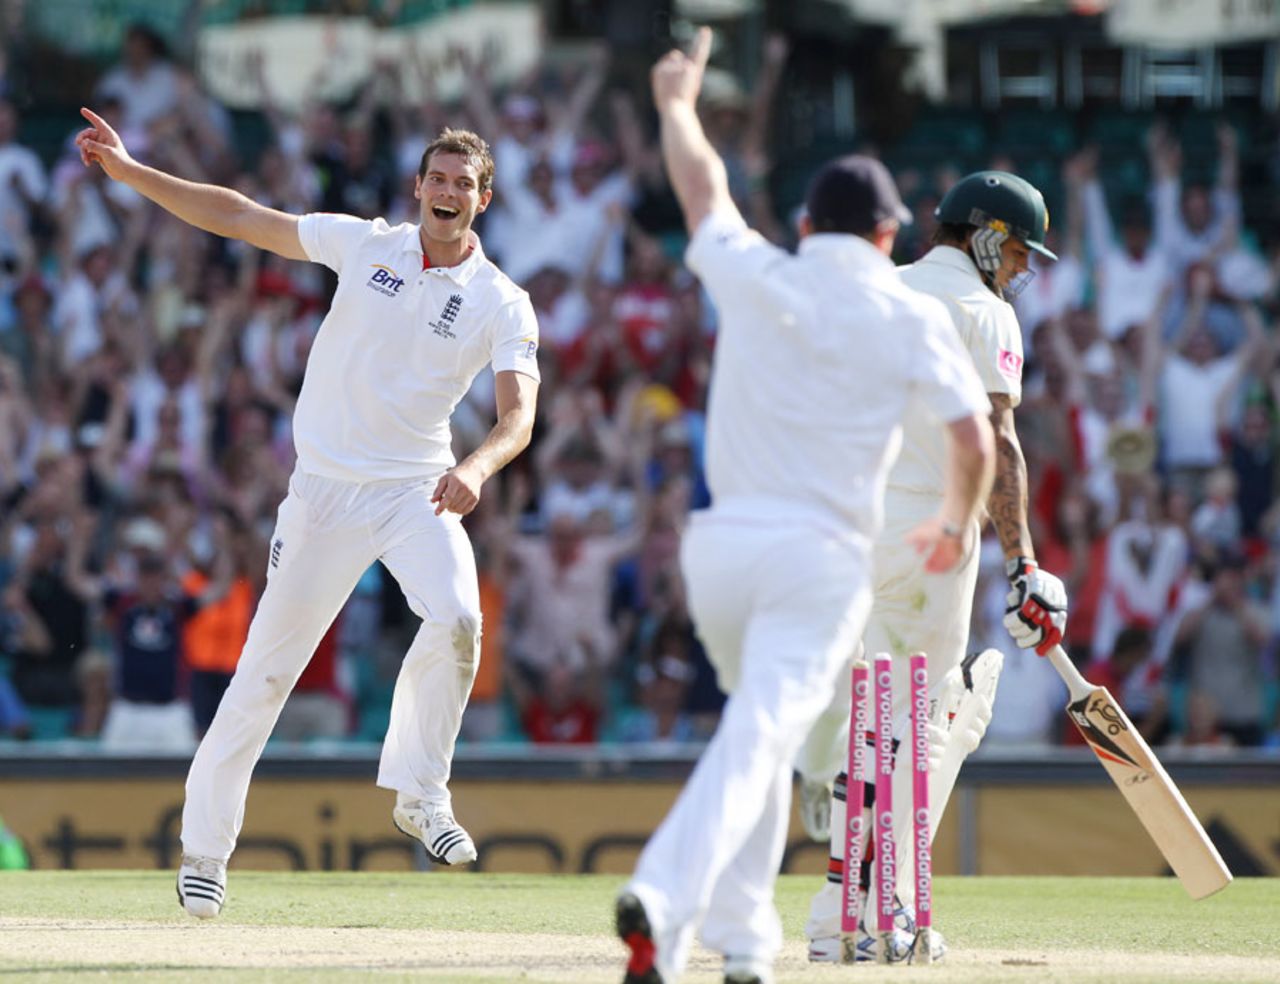 Chris Tremlett celebrates after bowling Mitchell Johnson, Australia v England, 5th Test, Sydney, 4th day, January 6, 2011